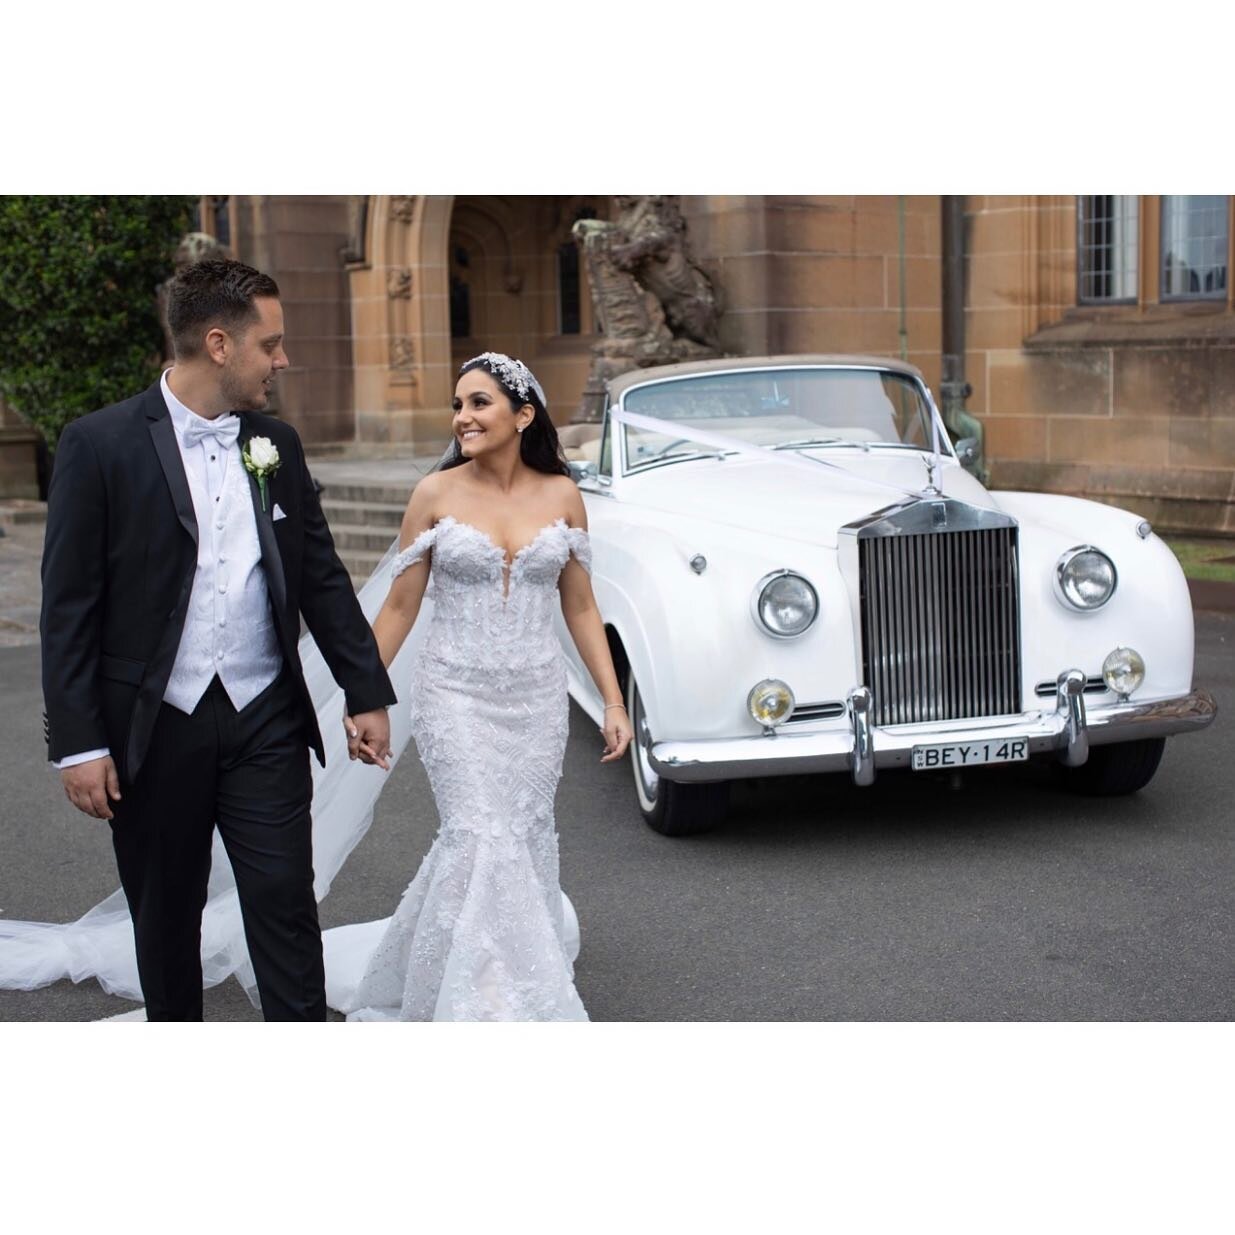 Leanna &amp; Adam taking a romantic stroll 💕 @christophergeorgephotography 
...
#weddingcars #bride #groom #classic #rollsroyce #love #sydney #rollupinarolls